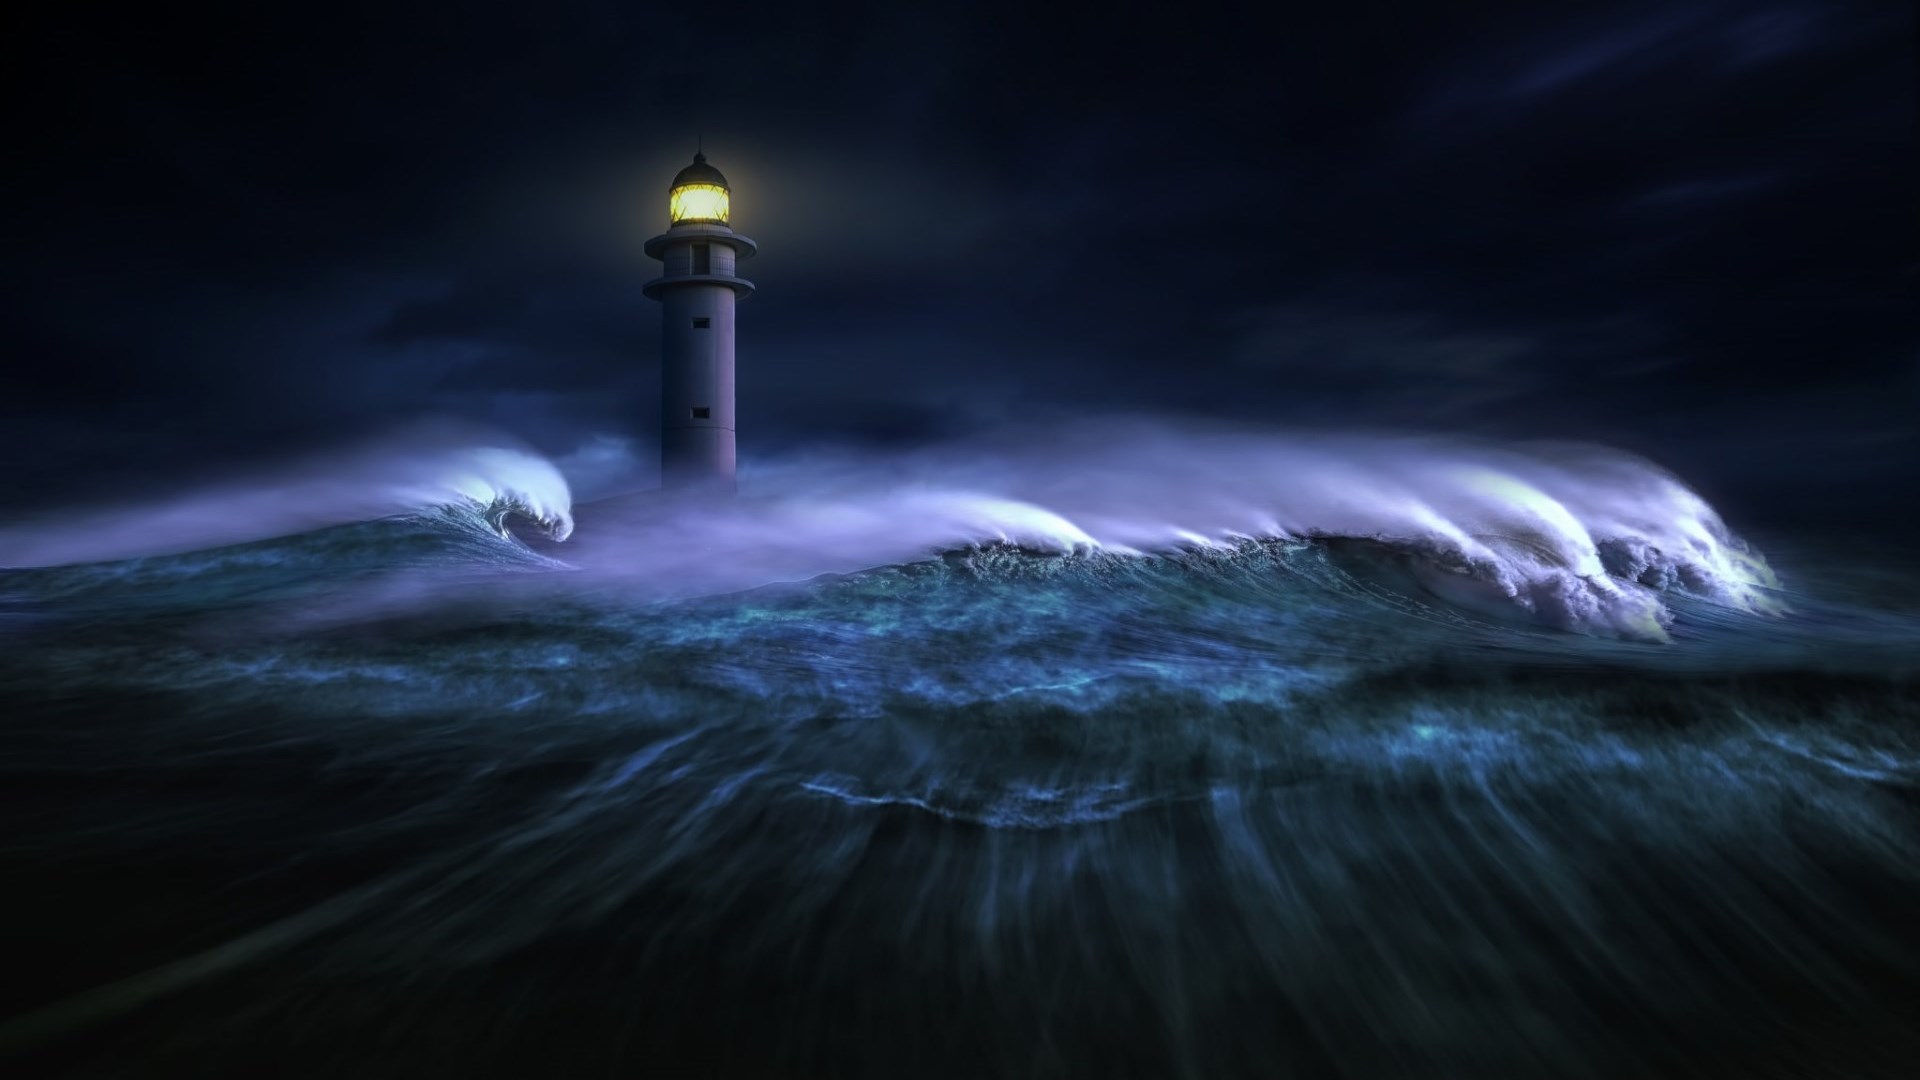 General 1920x1080 Nikos Bantouvakis 500px night sea storm dark nature digital art lighthouse